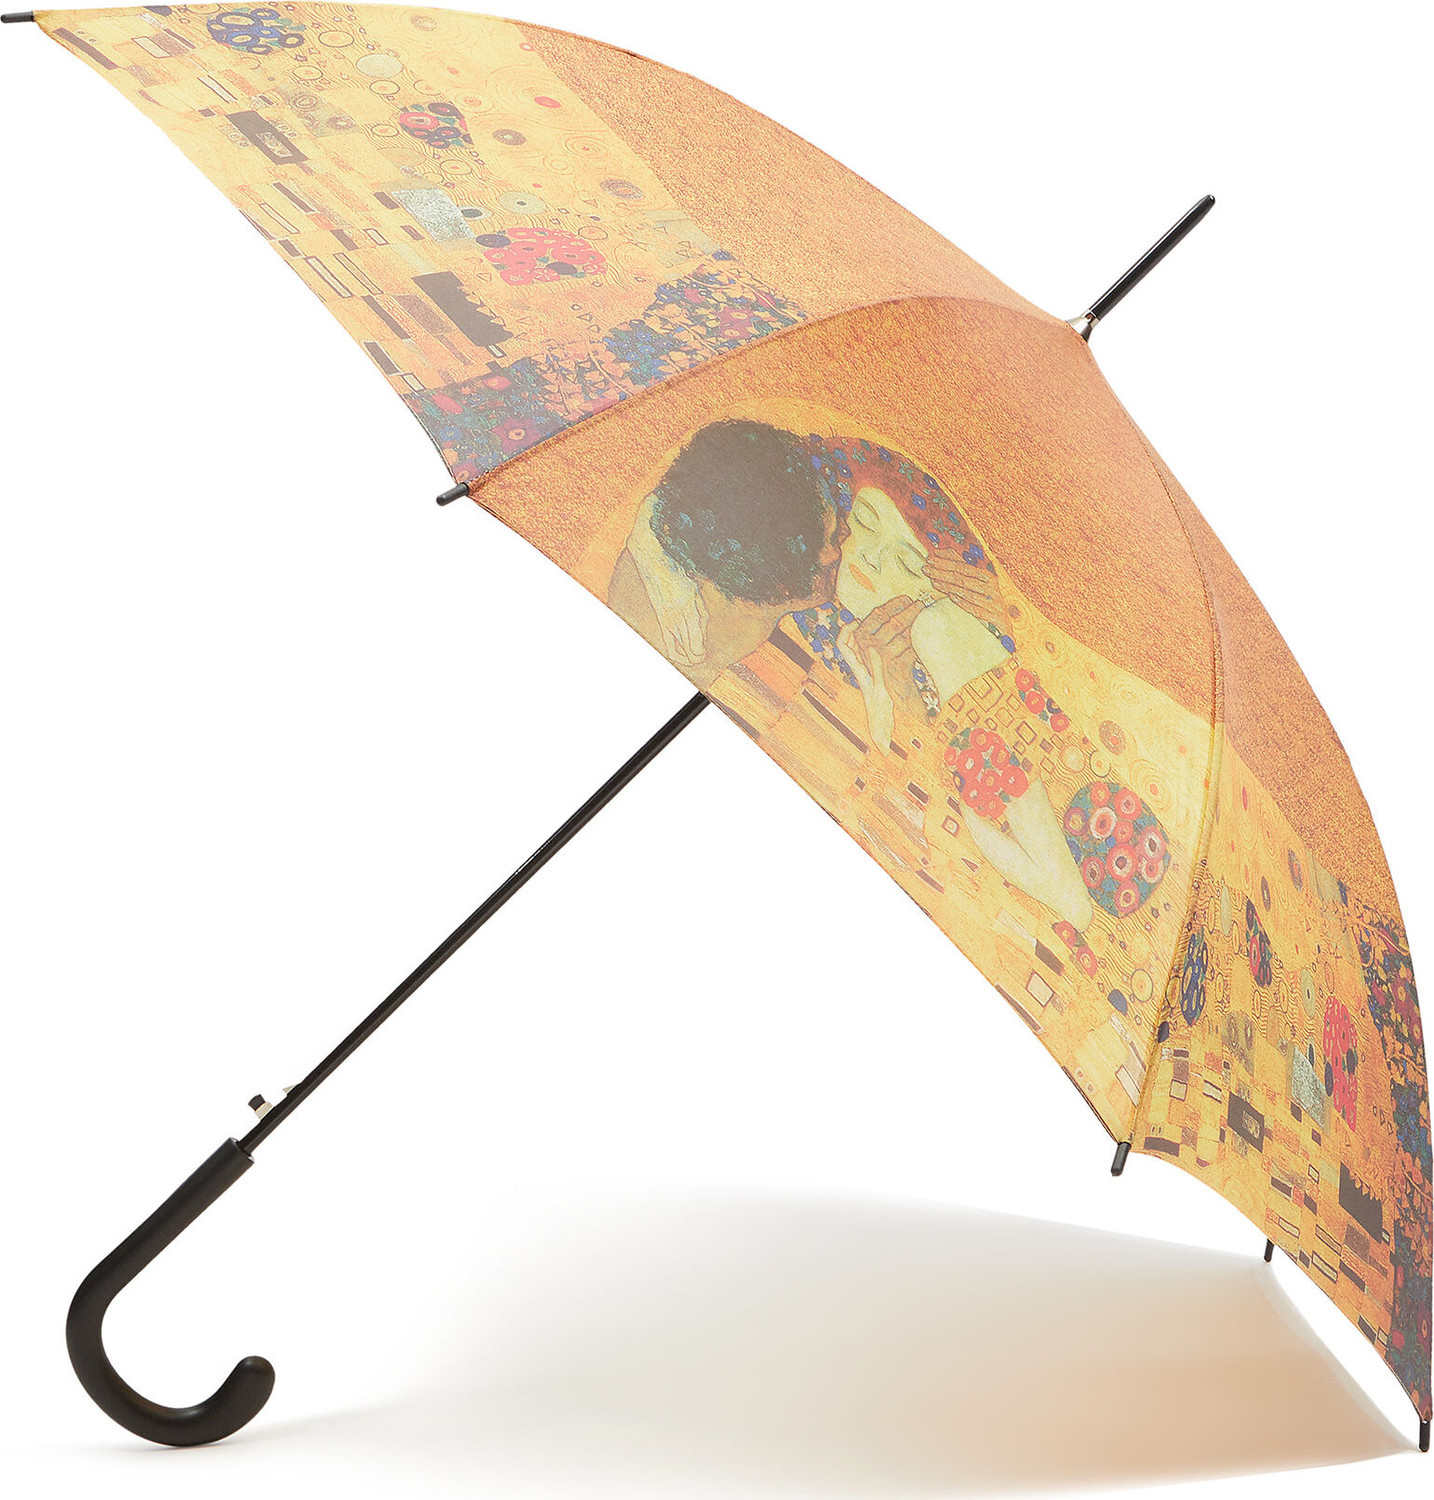 Deštník Happy Rain Taifun Klimt II 74130 Kleines Motiv